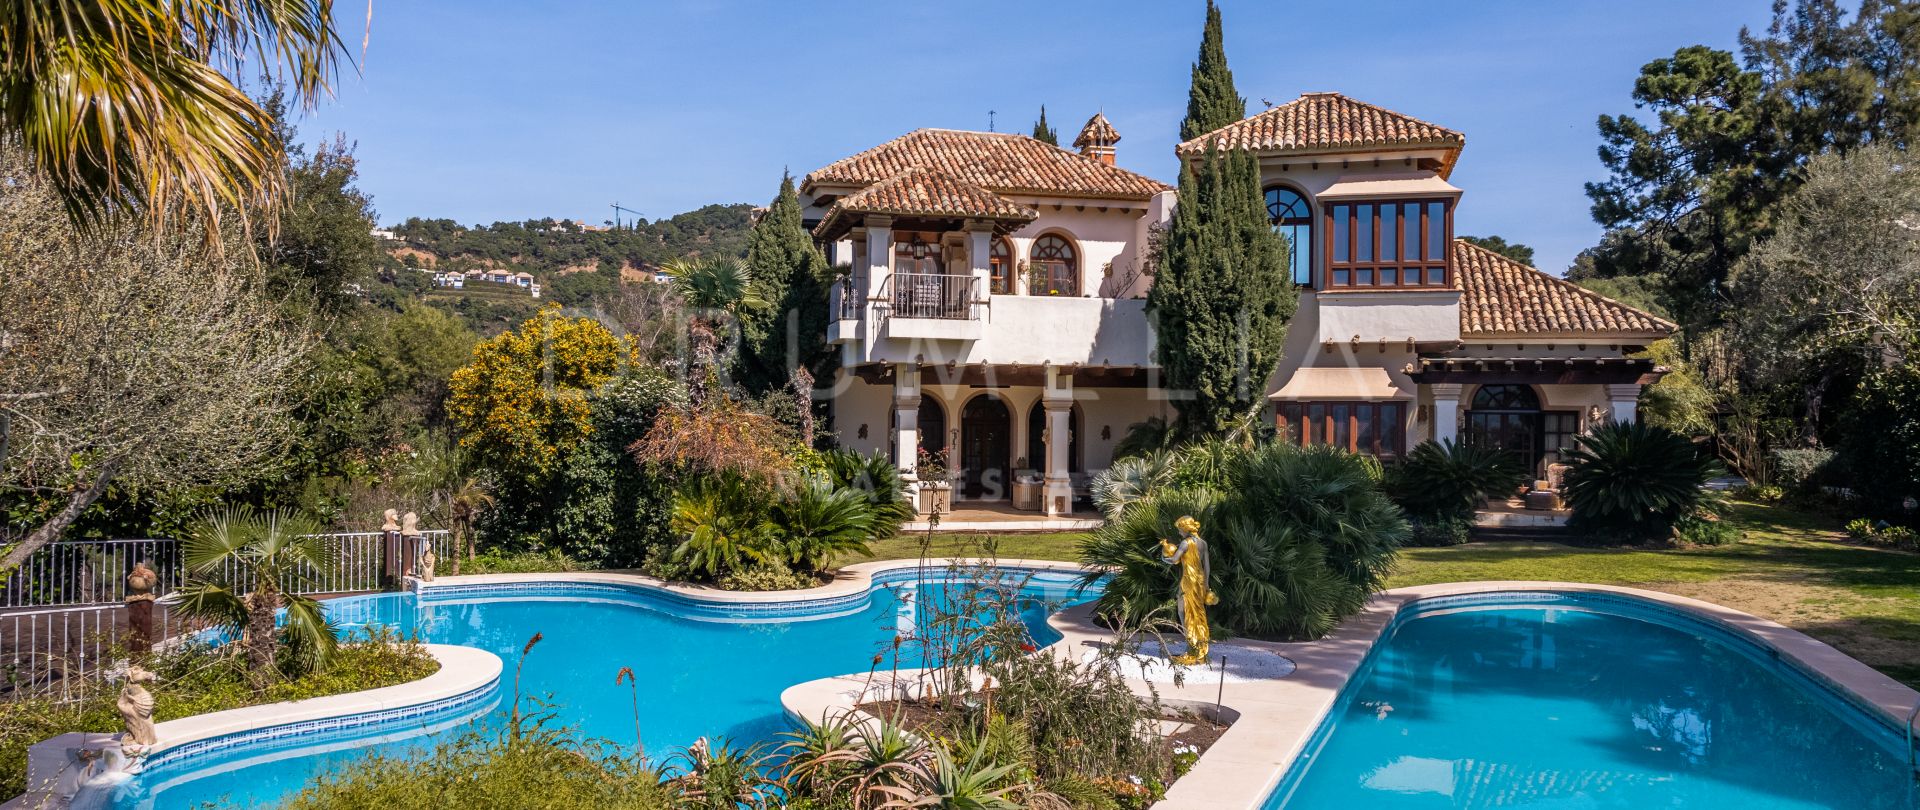 Prächtige mediterrane Villa im klassischen Stil in La Zagaleta, Benahavis, zu verkaufen